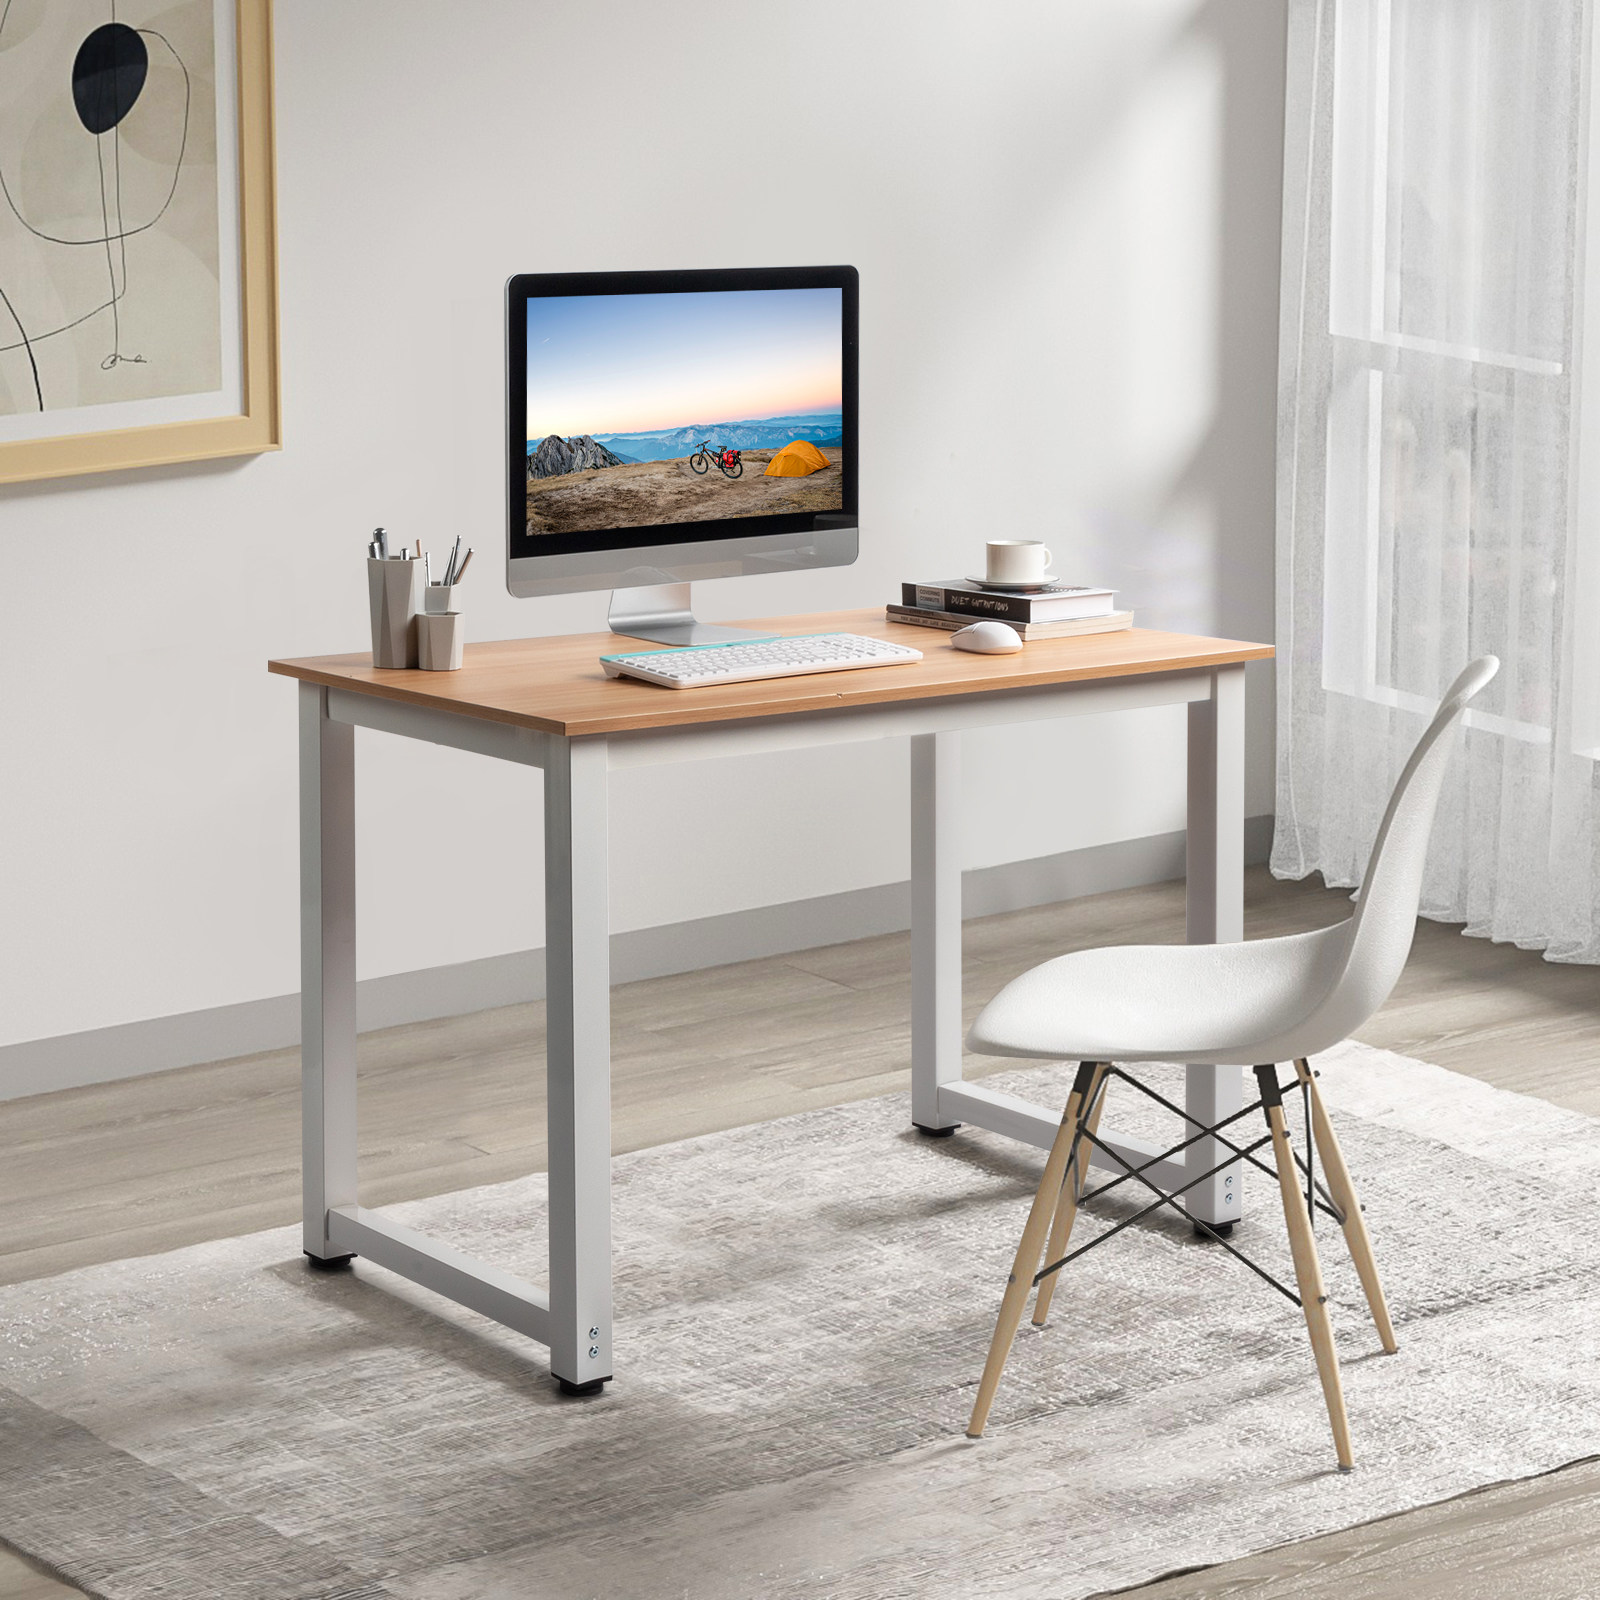 Ktaxon Wood Computer Desk PC Laptop Study Table Workstation Home Office Furniture - image 5 of 10